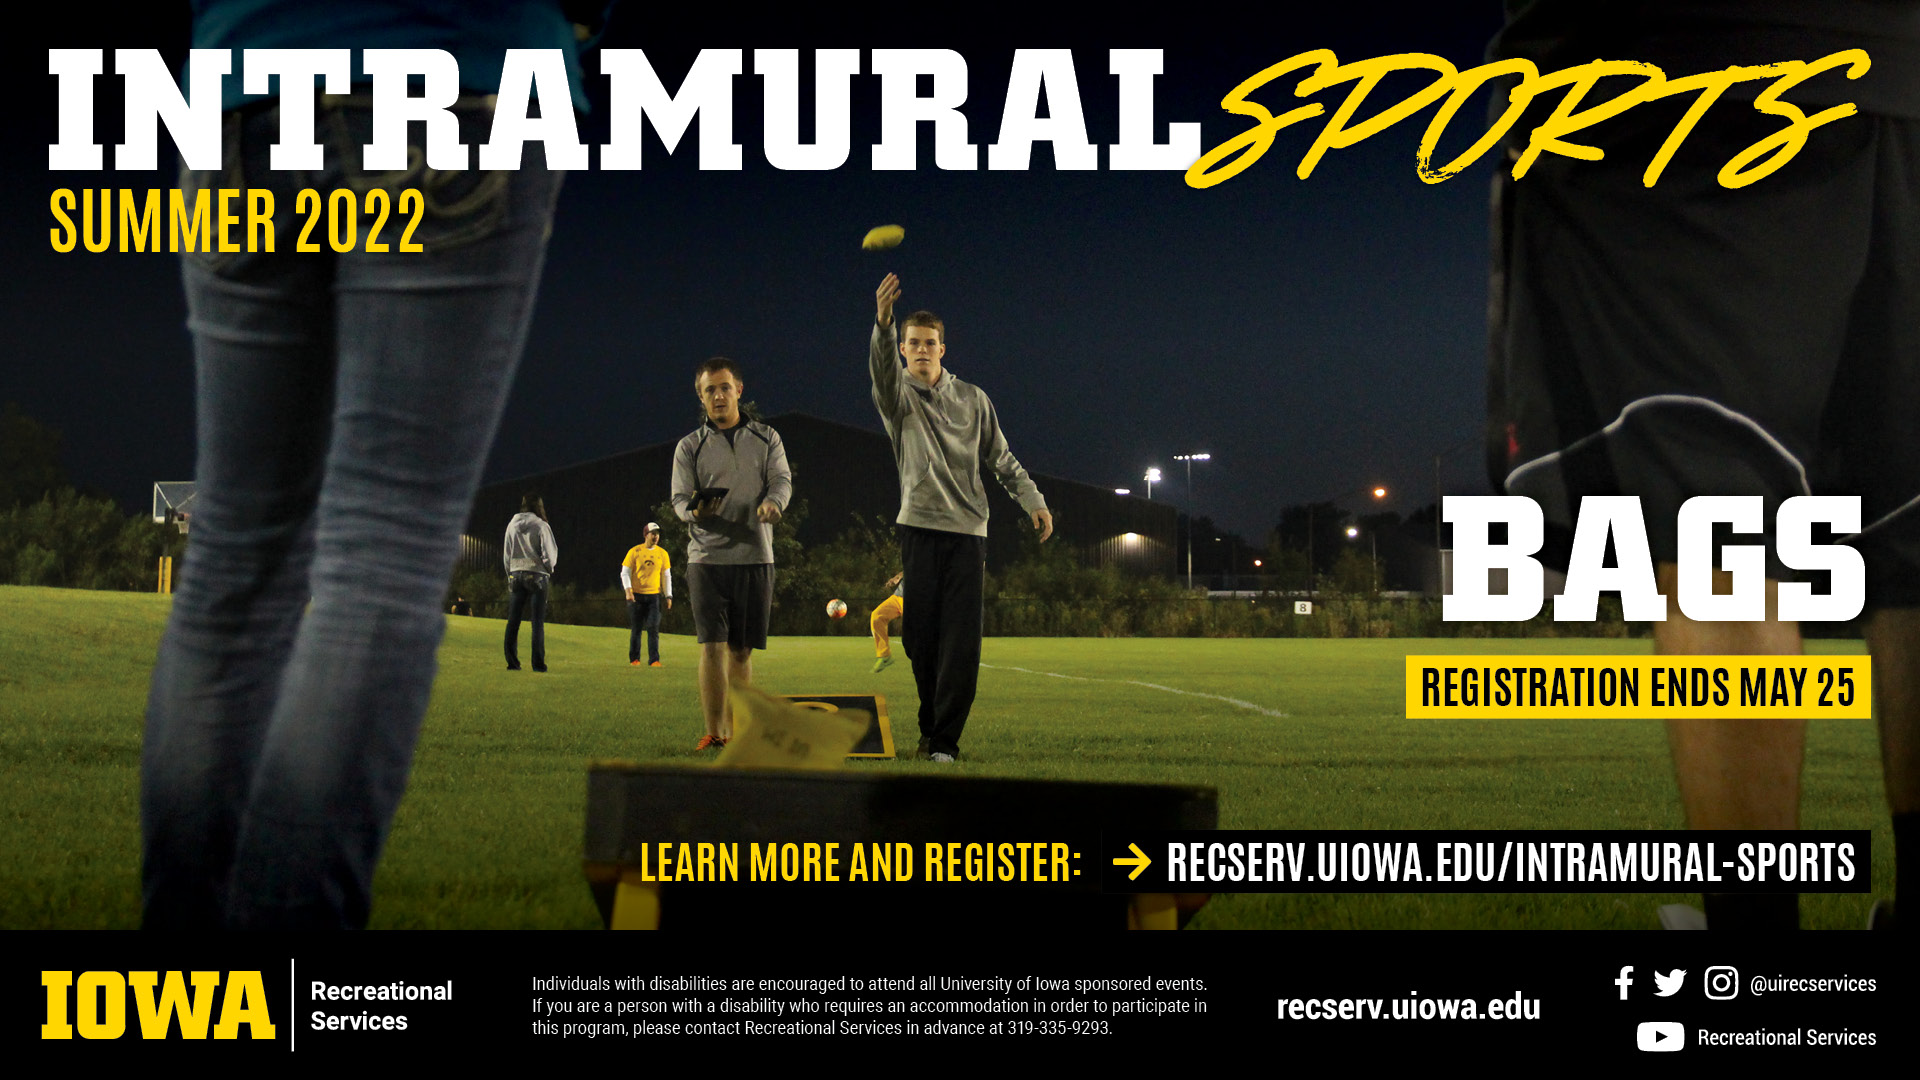 Summer 2022 Intramural Sports Bags. Registration ends May 25. Learn more and register: recserv.uiowa.edu/intramural-sports